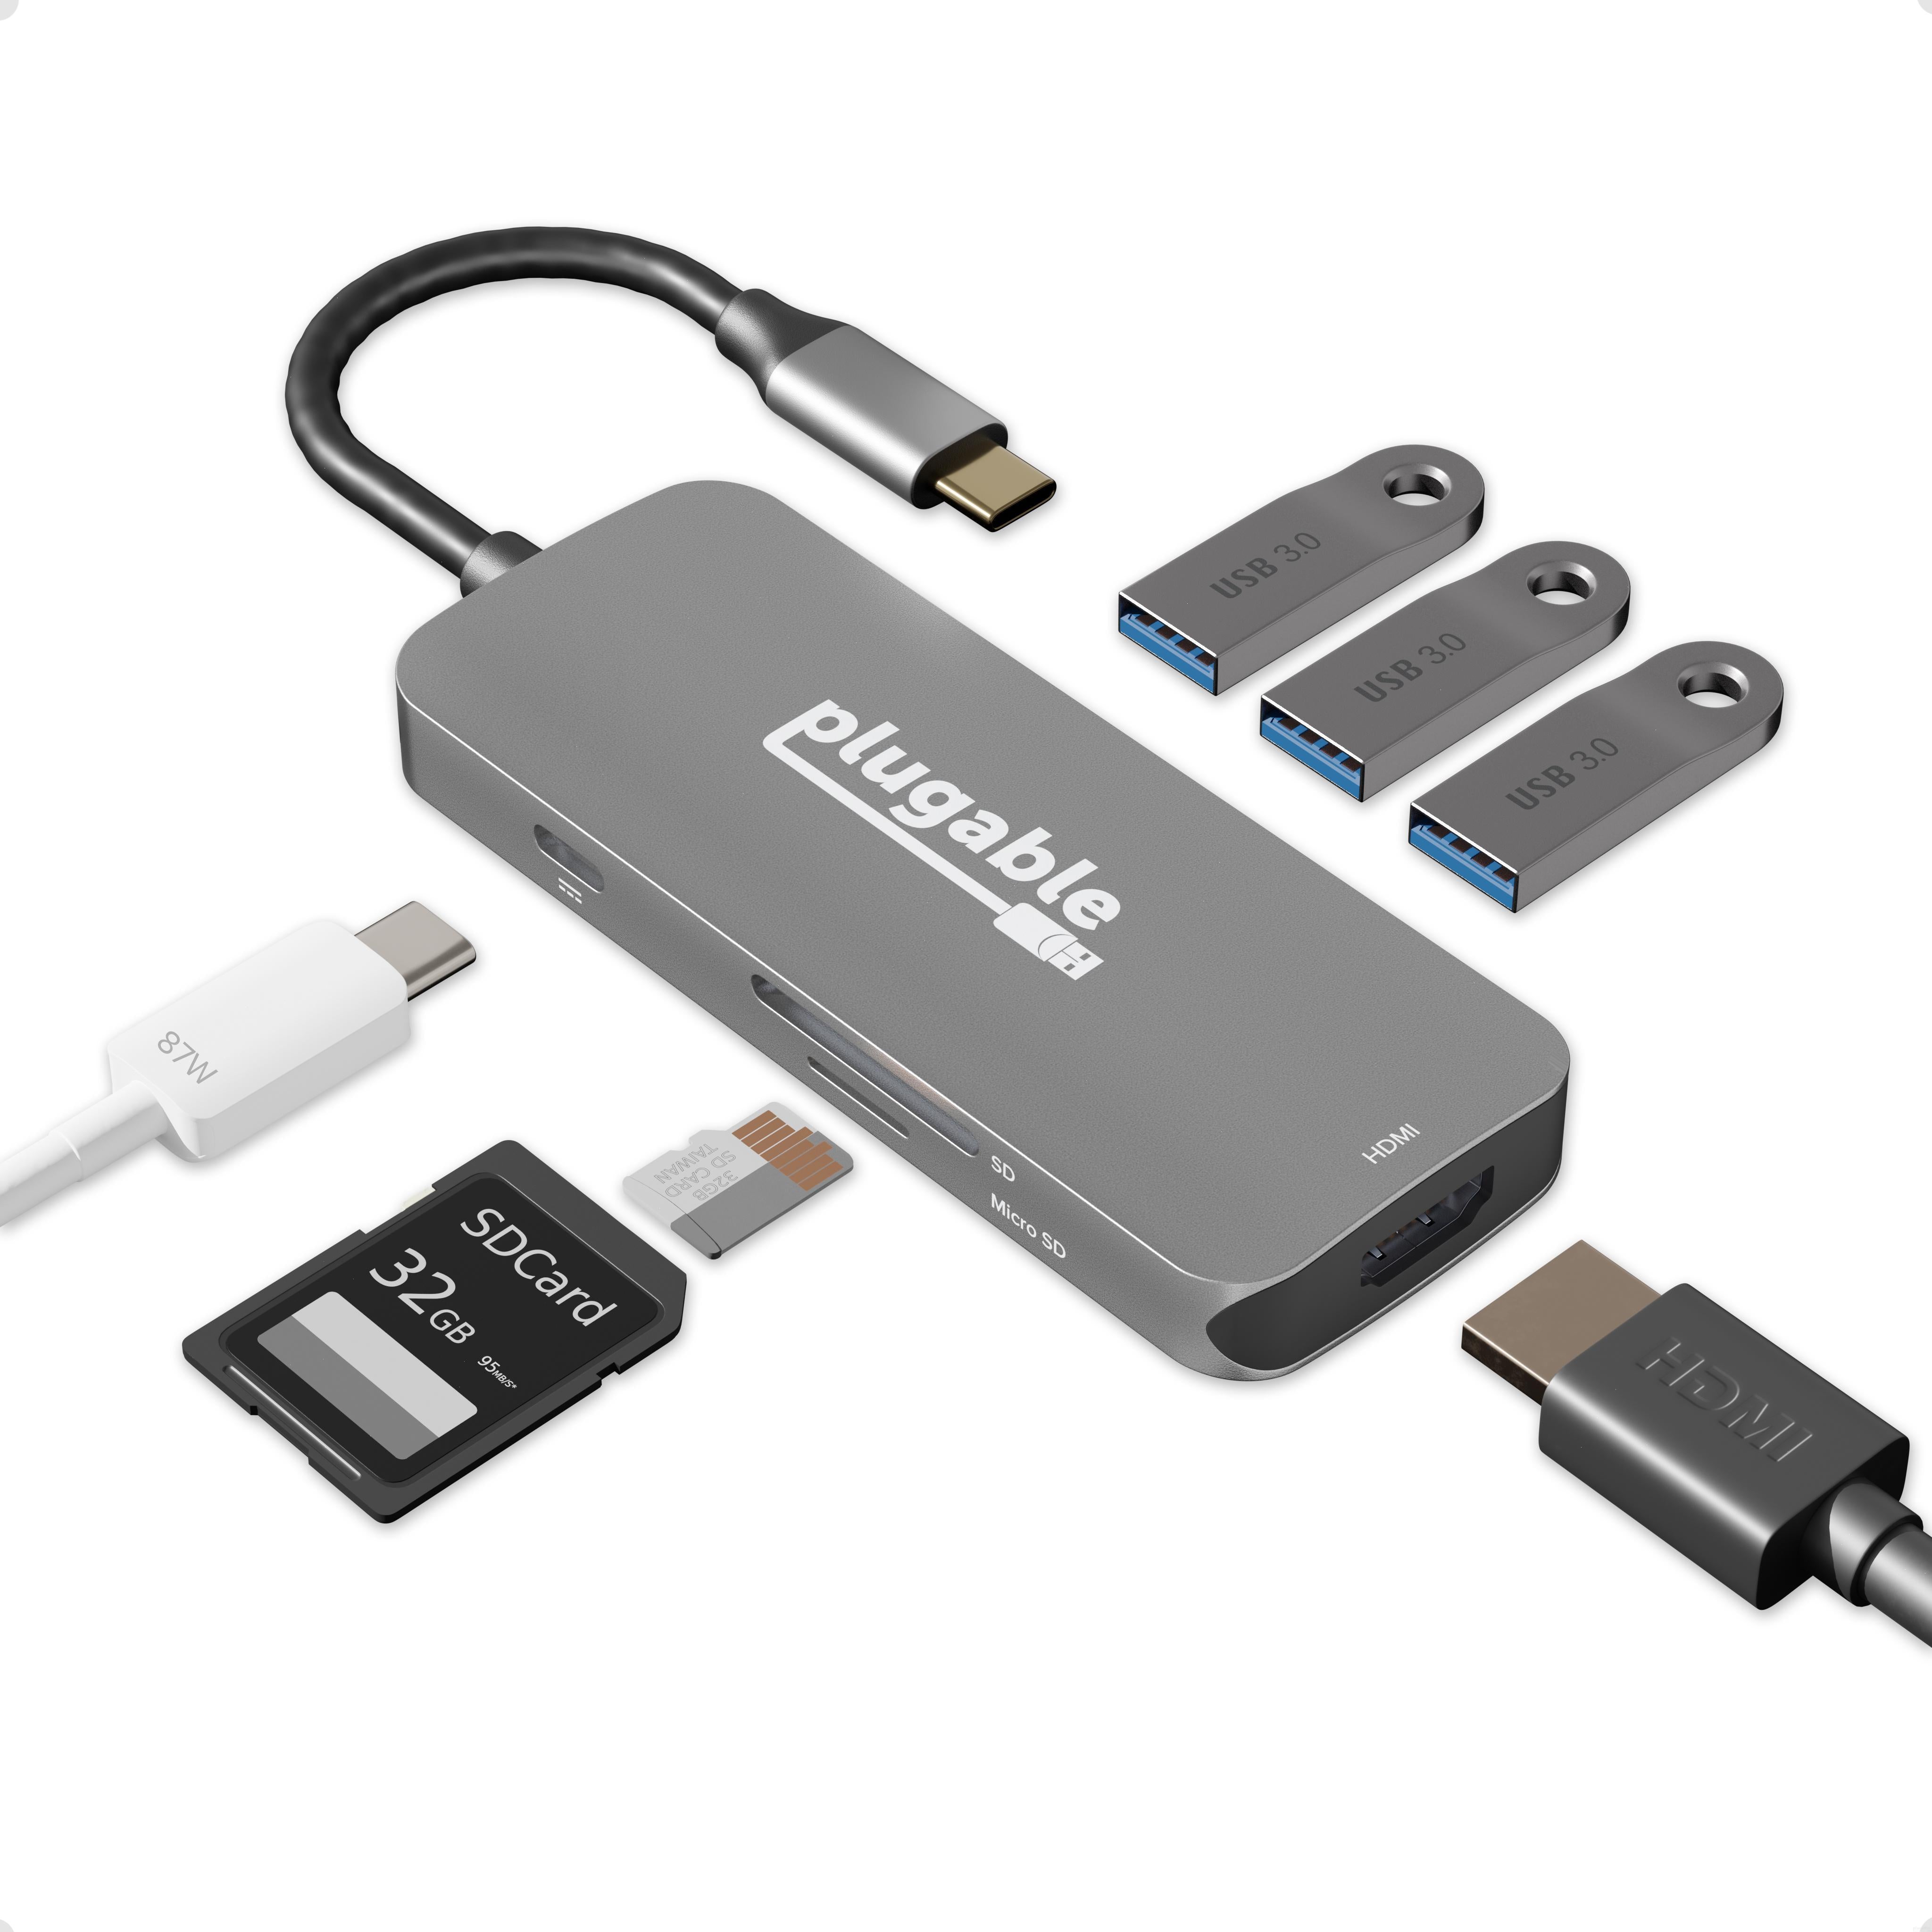 Plugable USB-C 7-in-1 Hub – Plugable Technologies